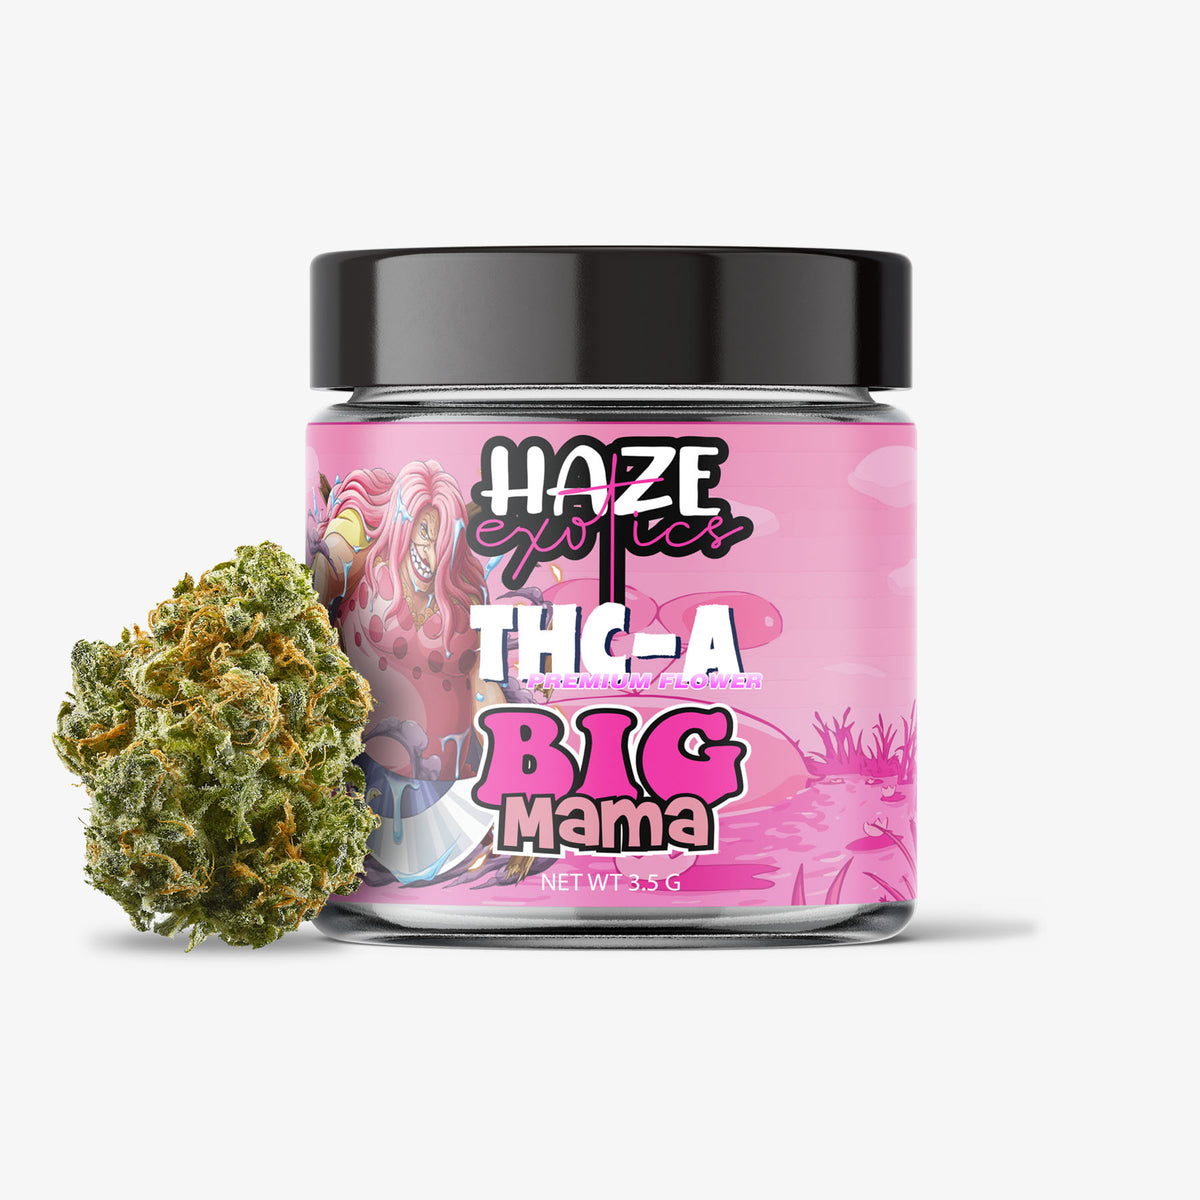 THC-A FLOWER / BIG MOMA / 3.5g JAR / HAZE EXOTICS